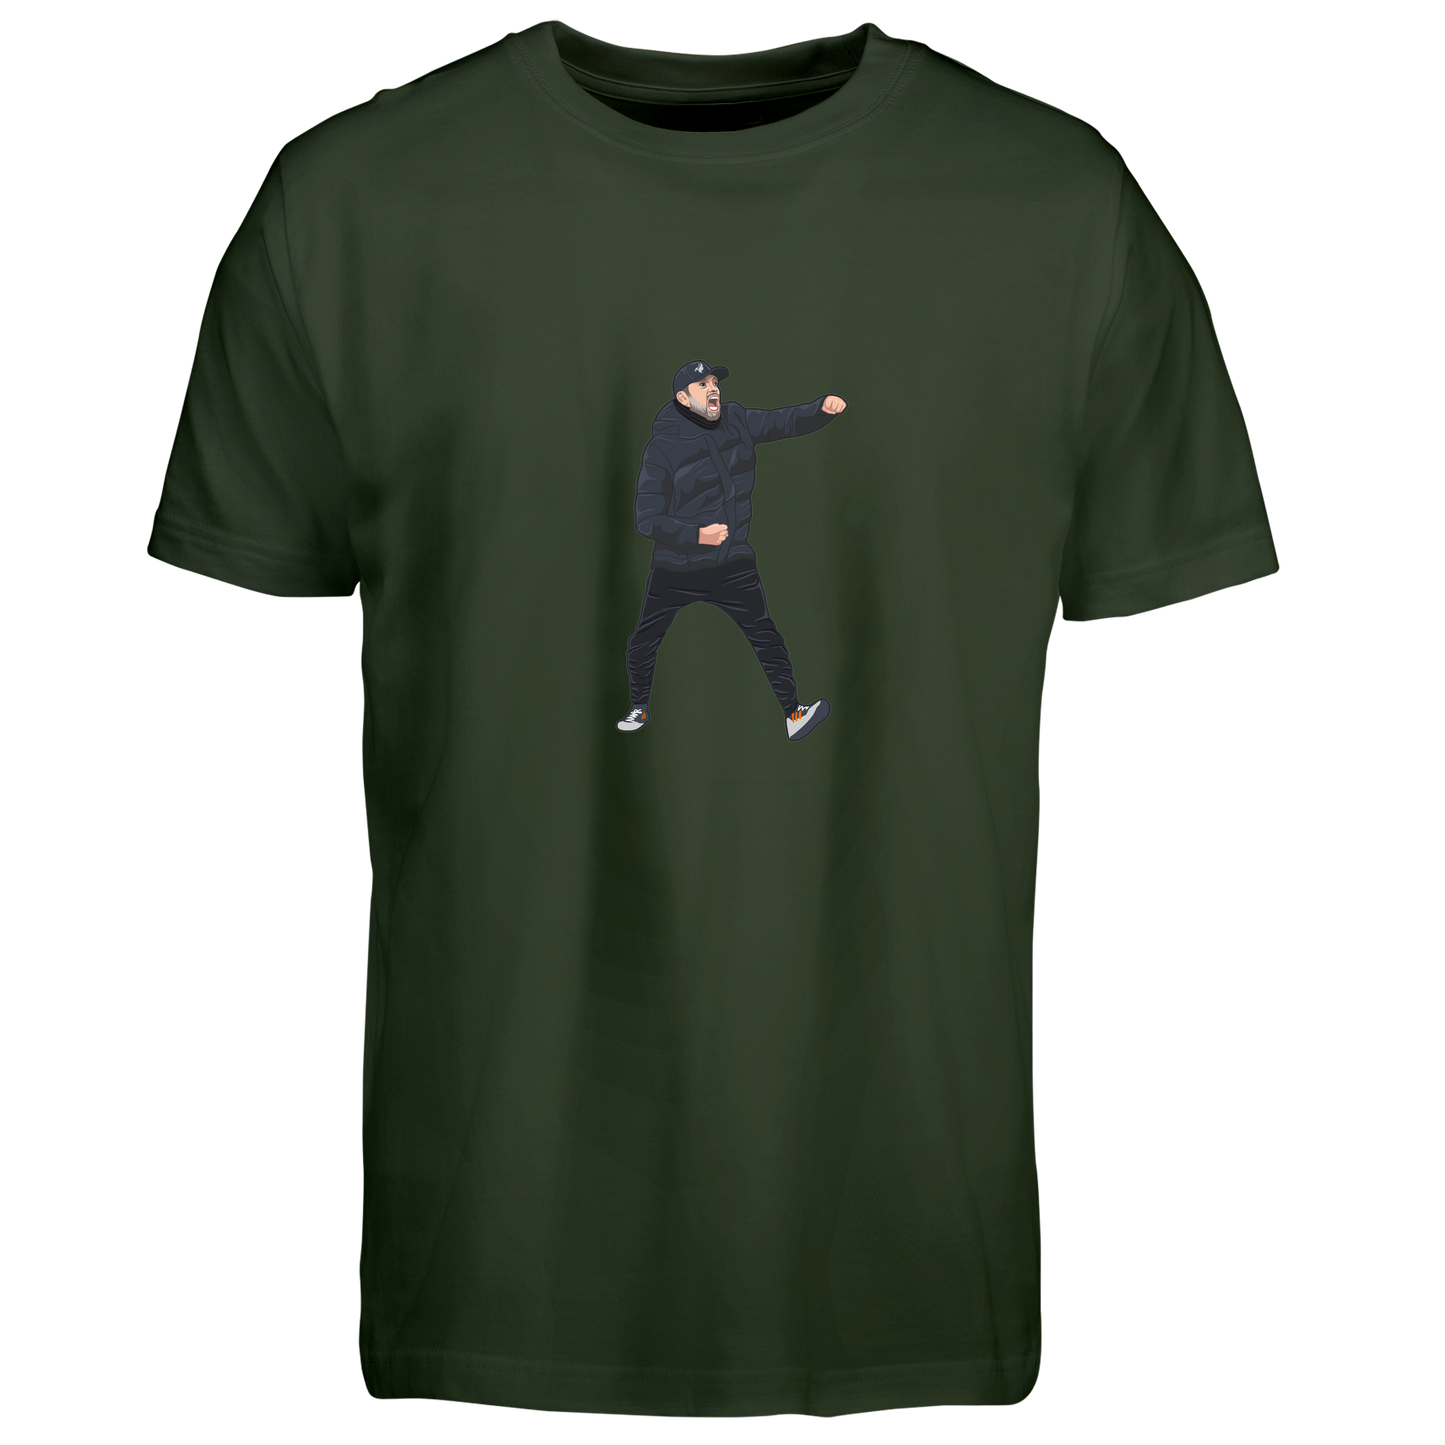 Klopp Fist Pump - T-shirt